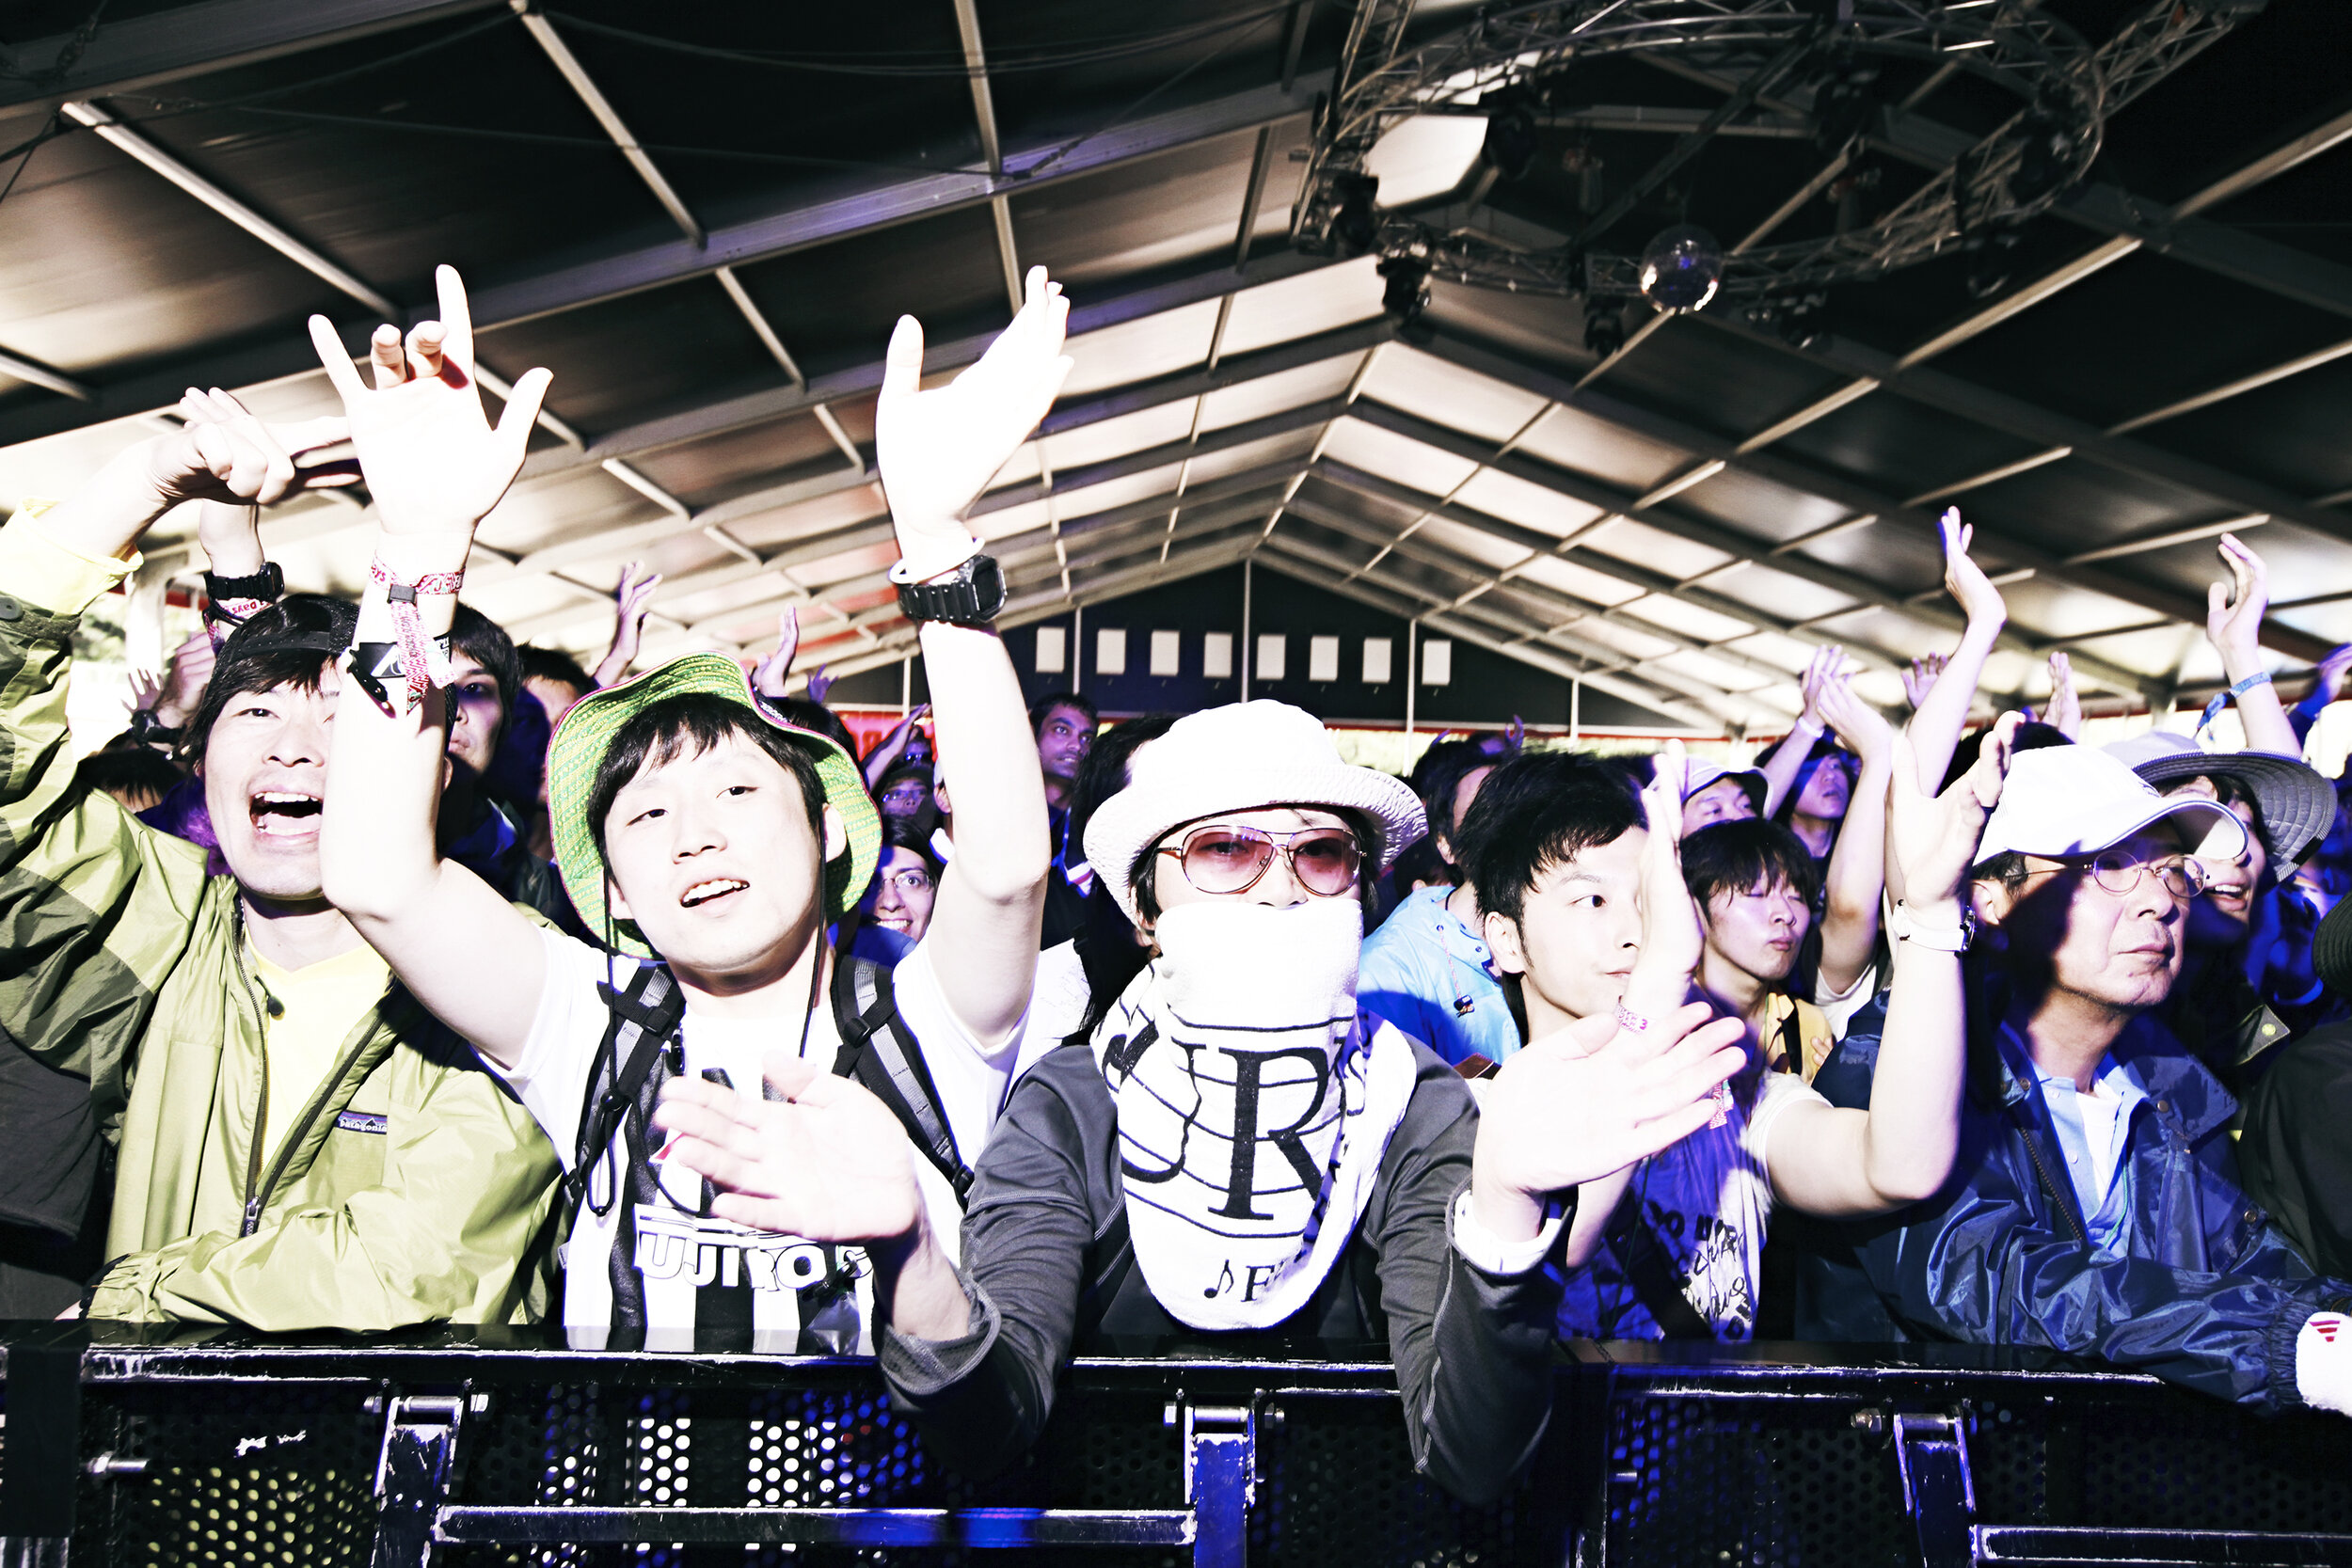 lovely fans at Fuji Rock, Japan.